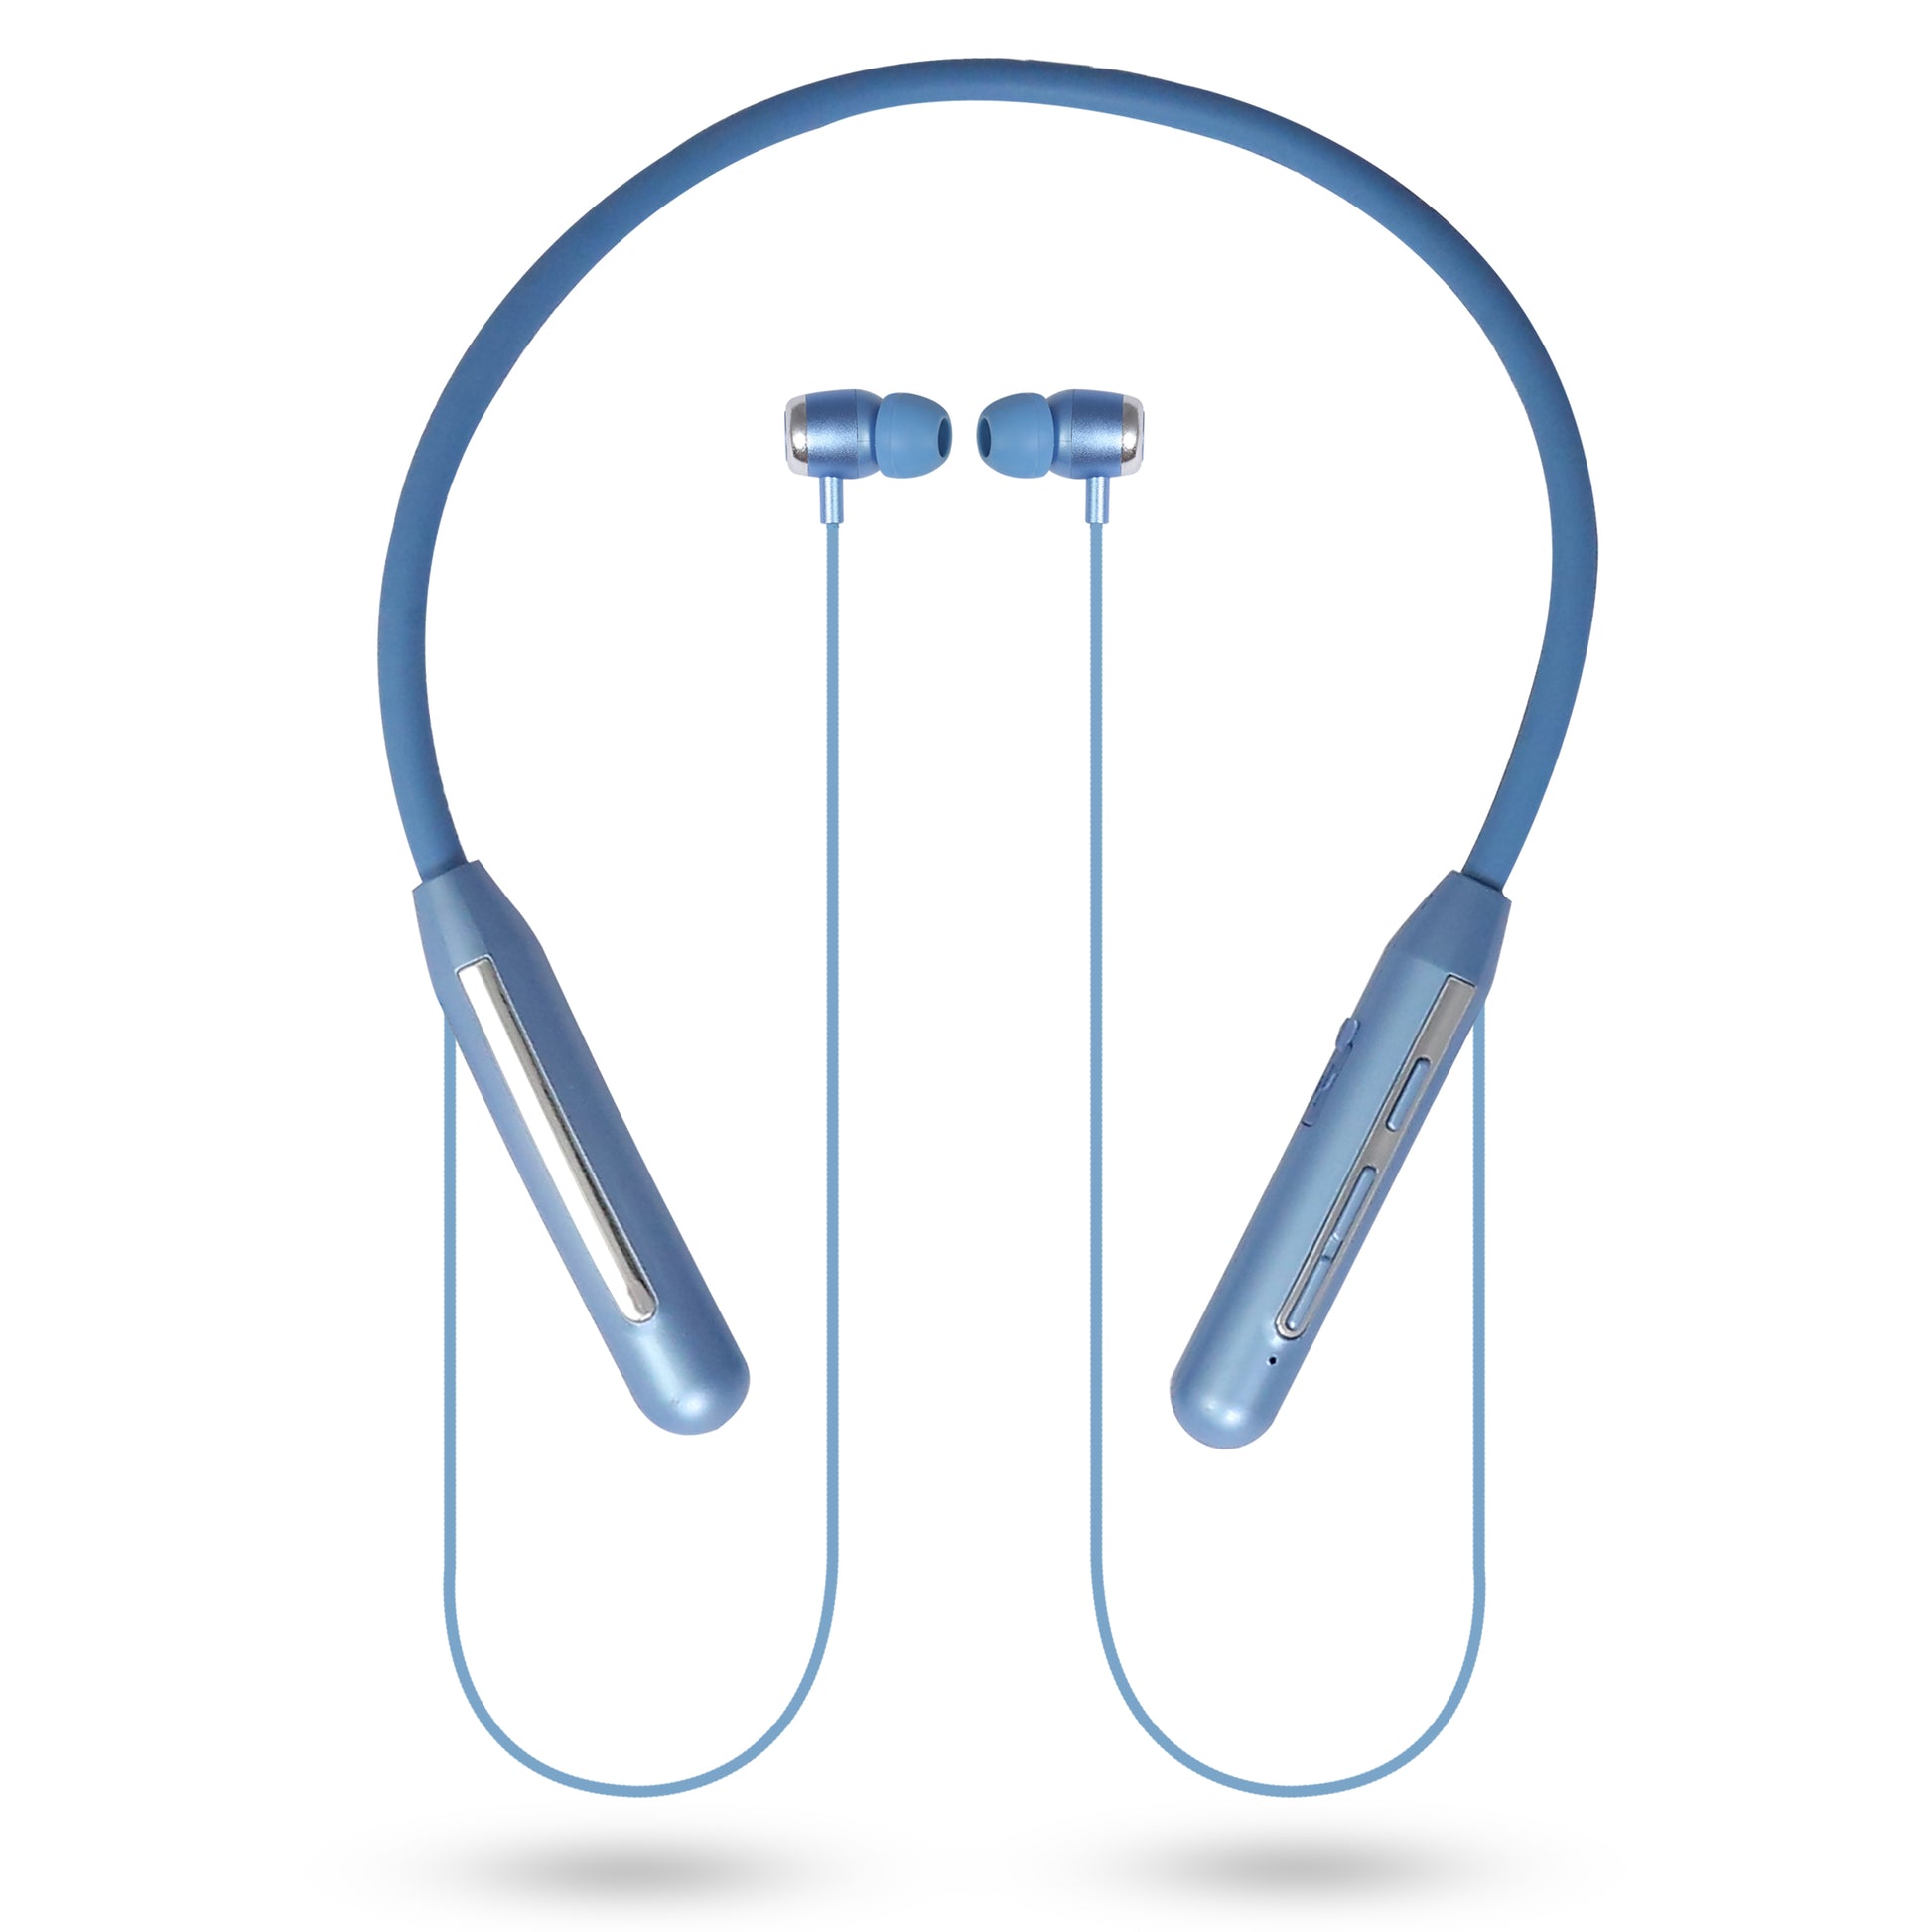 LA' FORTE Maximus Bluetooth Neckband Earphone - BT 5.3/ 100 Hr Playtime, 10 mm Drivers/ Active Noise Cancellation